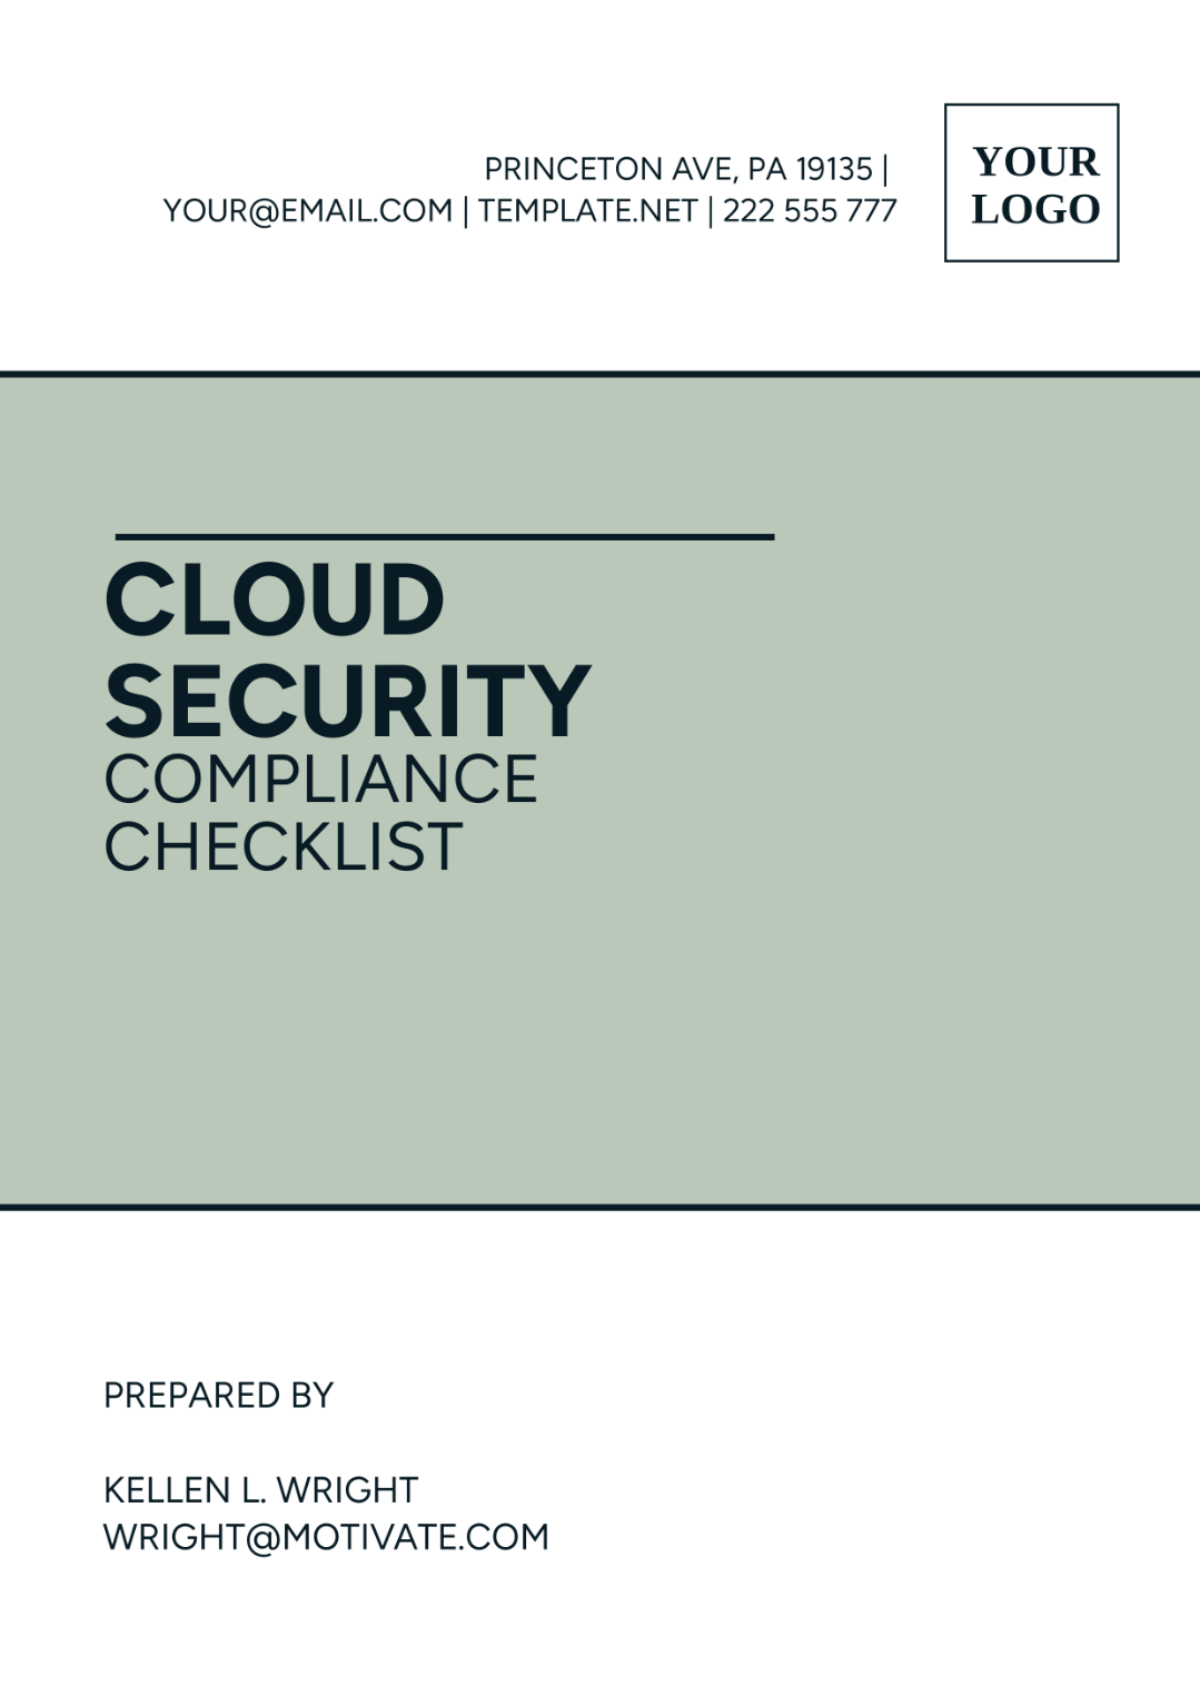 Cloud Security Compliance Checklist Template